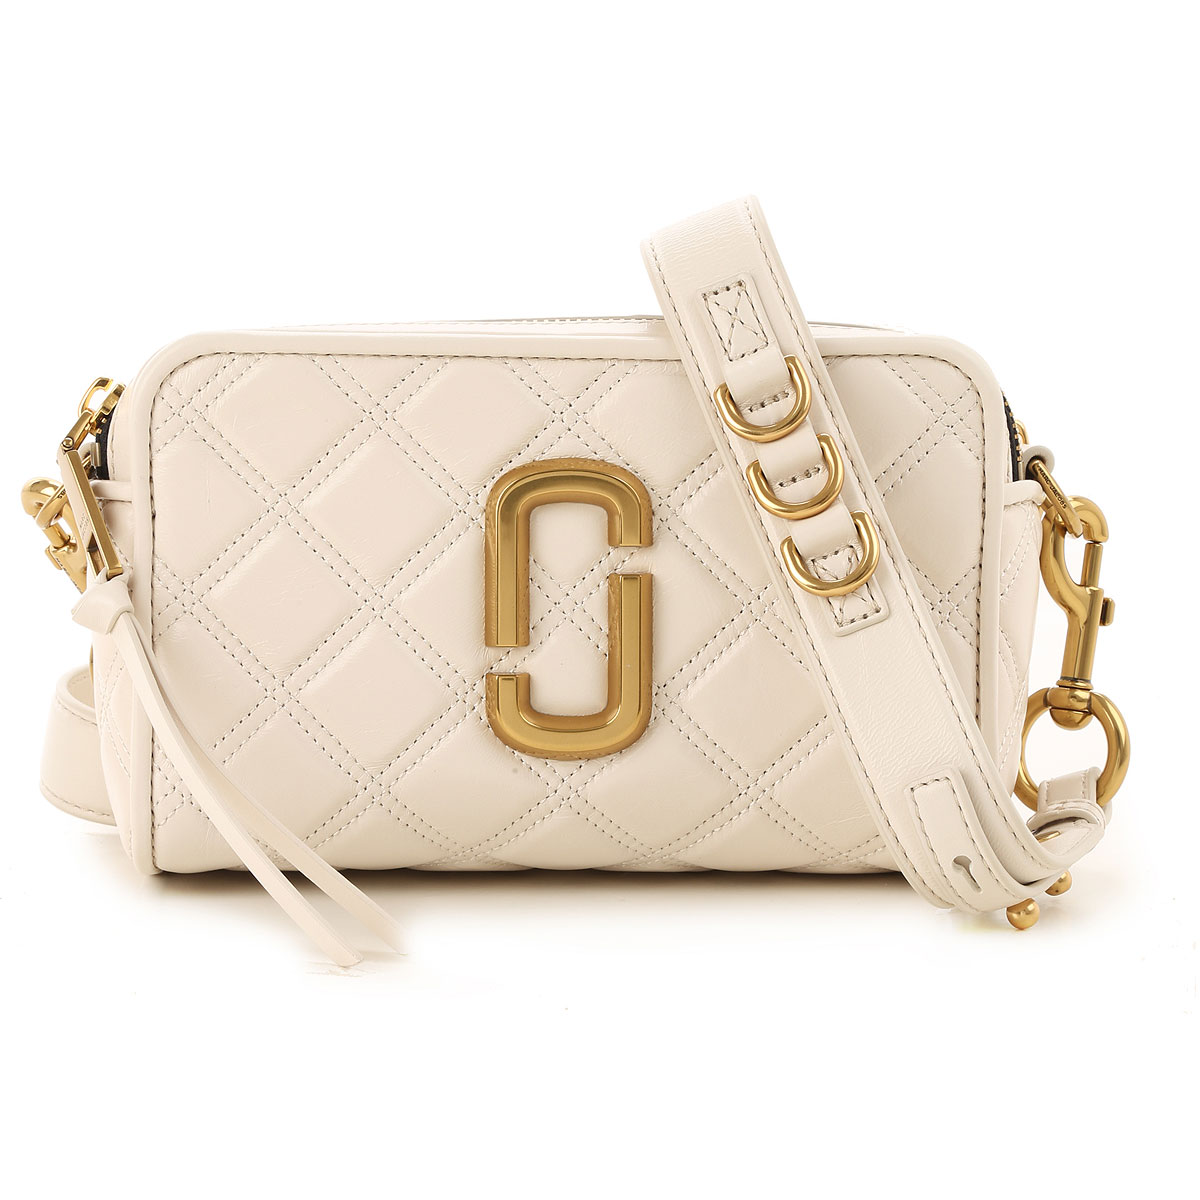 Handbags Marc Jacobs, Style code: m0015419-111-